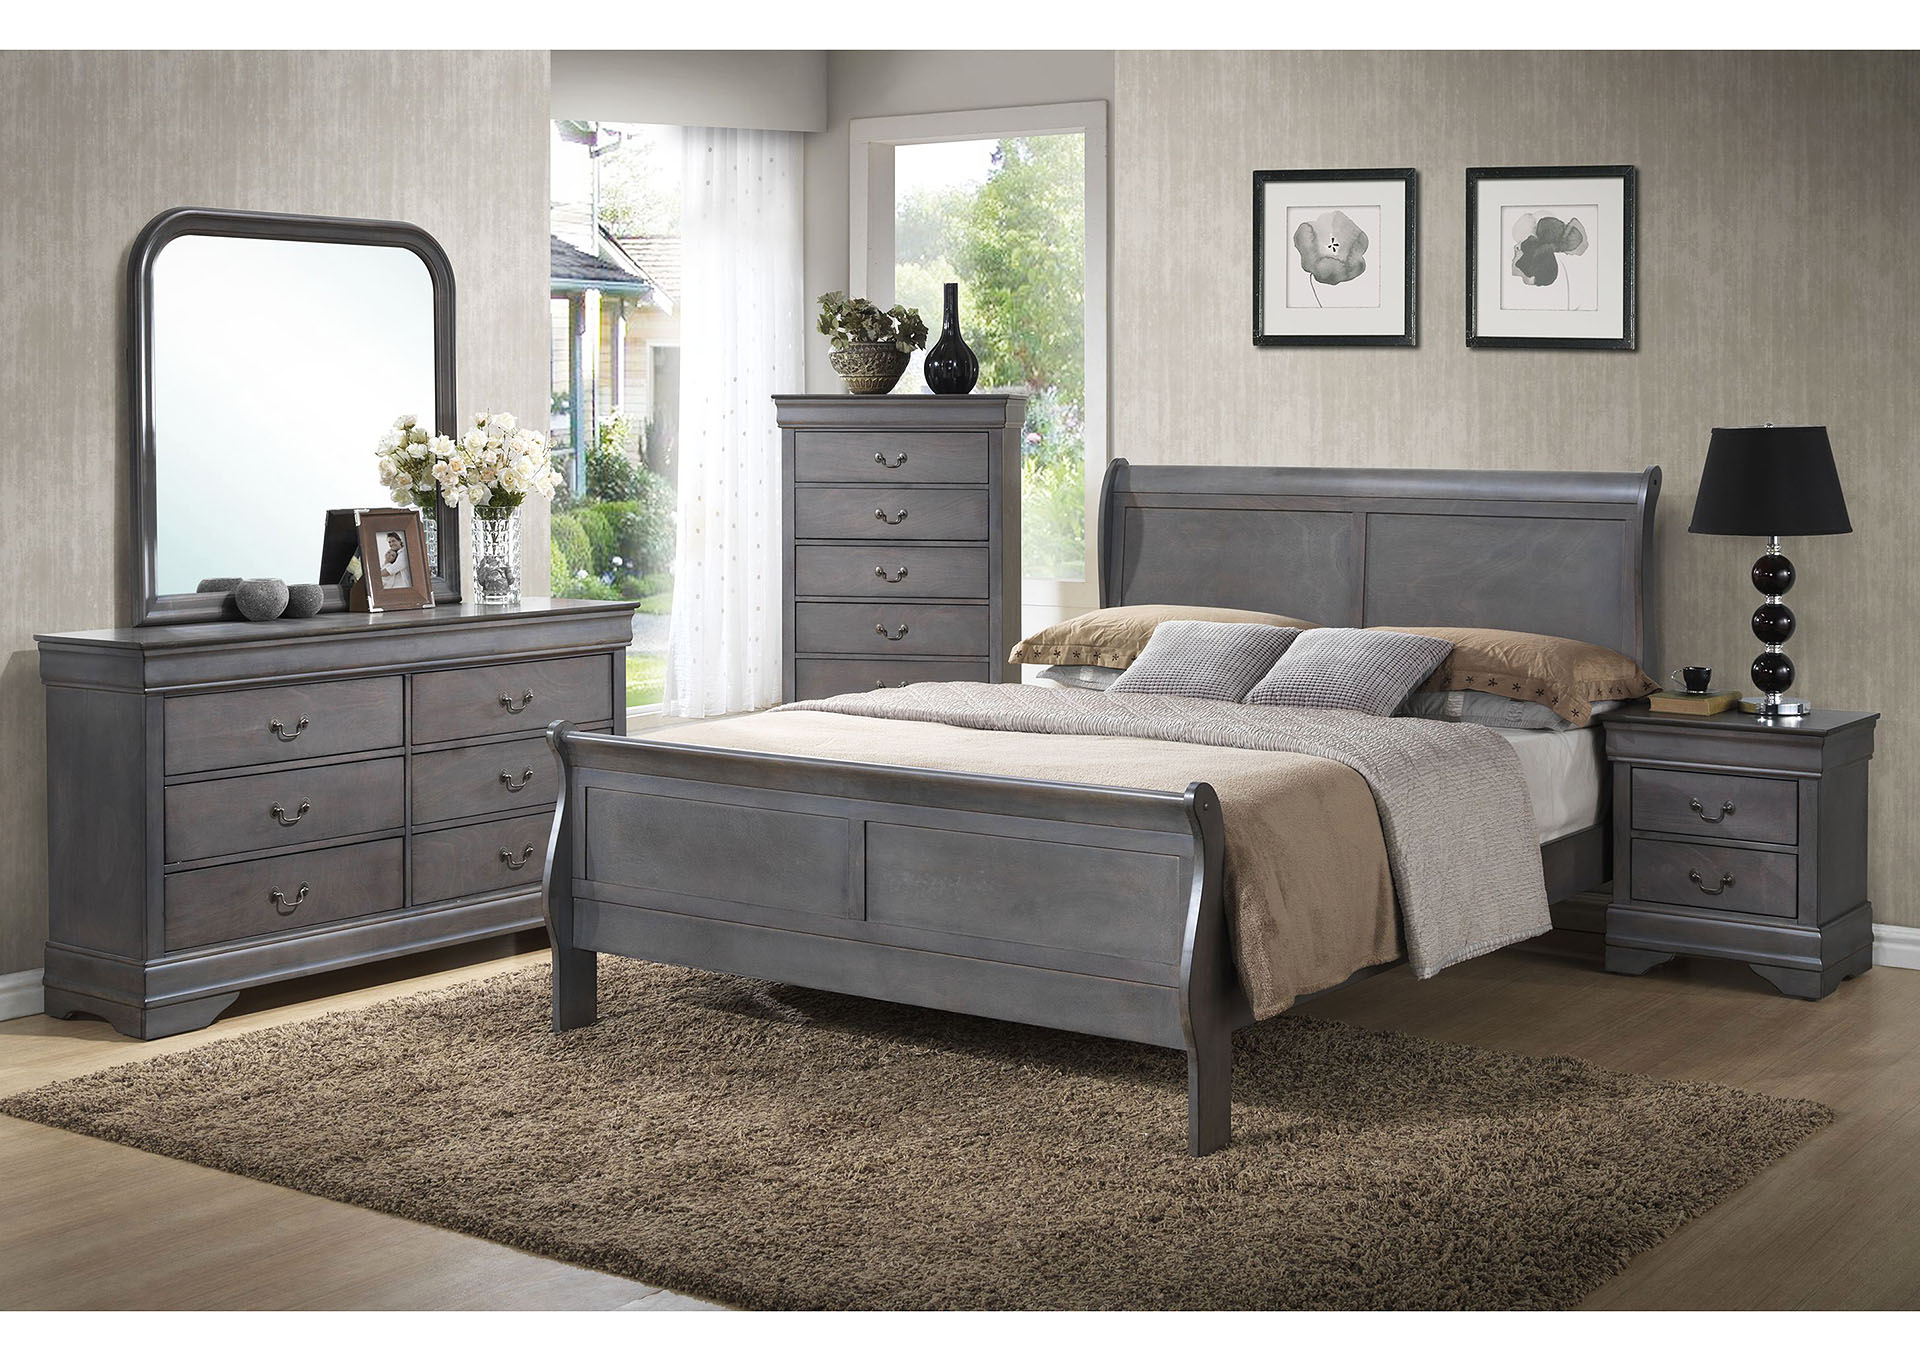 Twin Bed,Galaxy Home Furniture